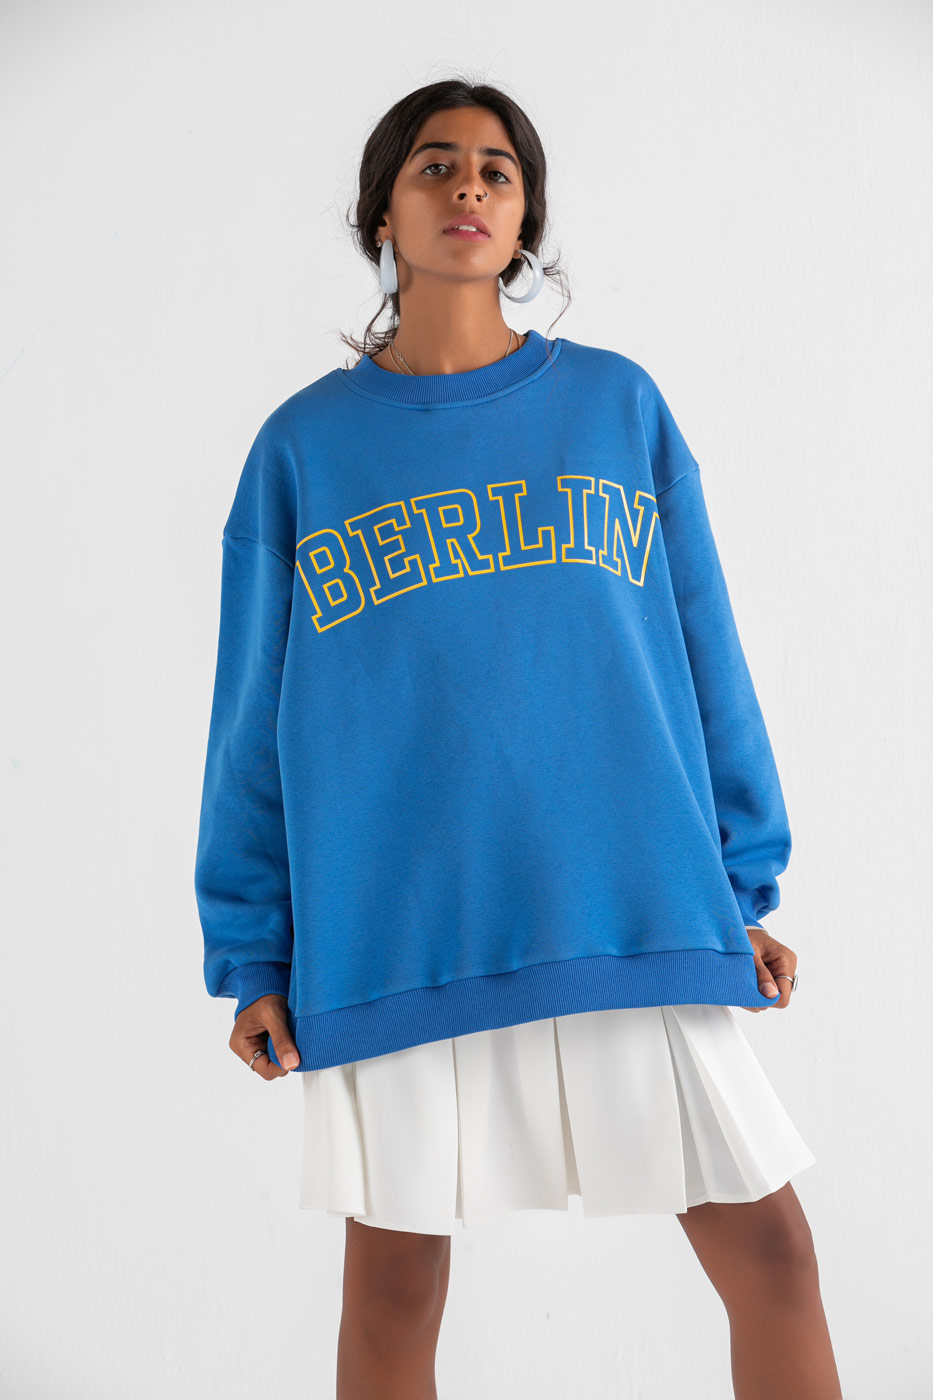 BERLIN Sweatshirt - Shop from Dresscode, Egypt